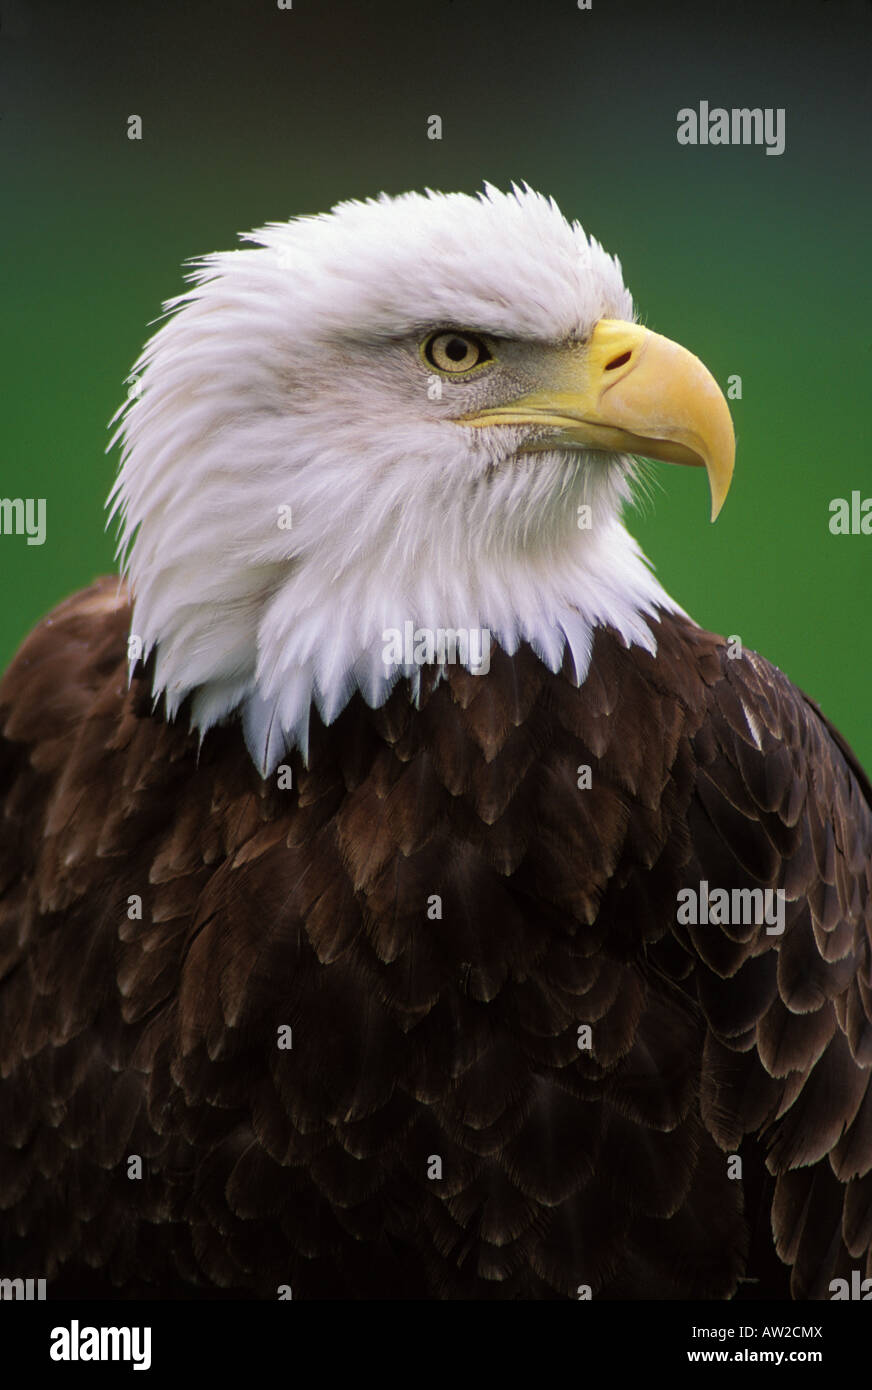 A bald eagle attentively surveys his surroundings Stock Photo